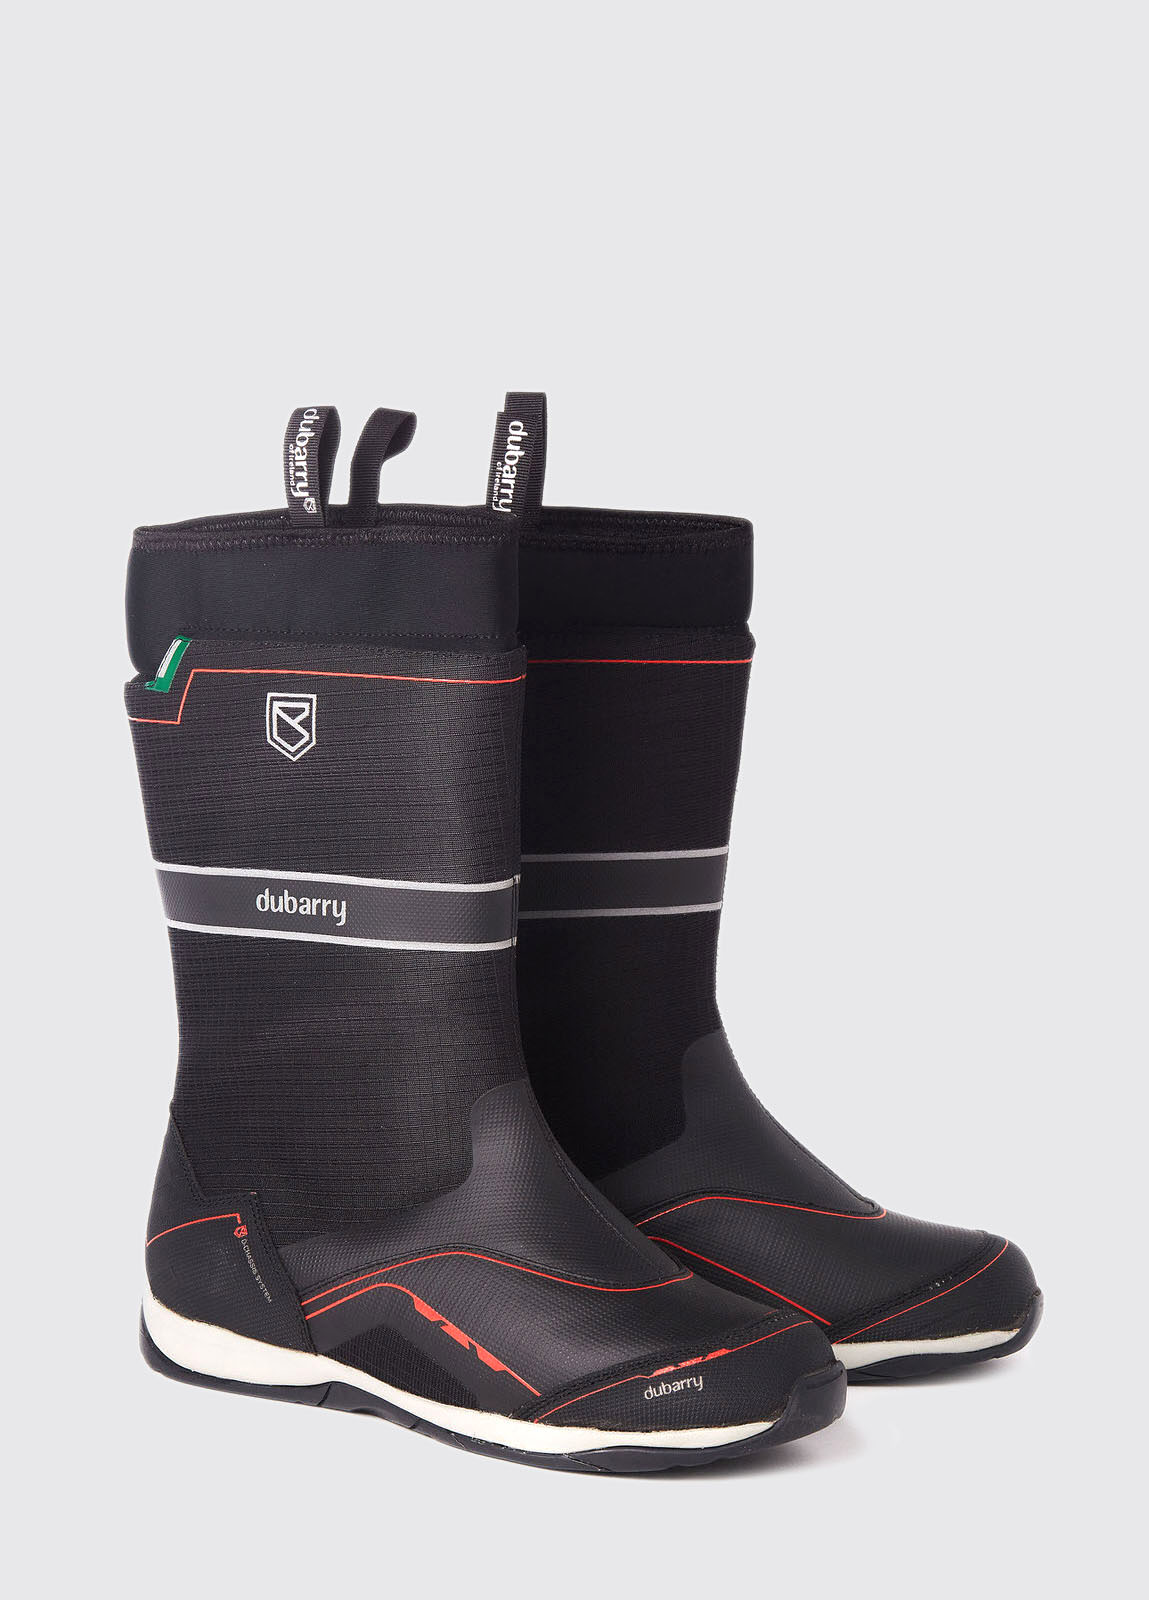 waterproof sailing boots